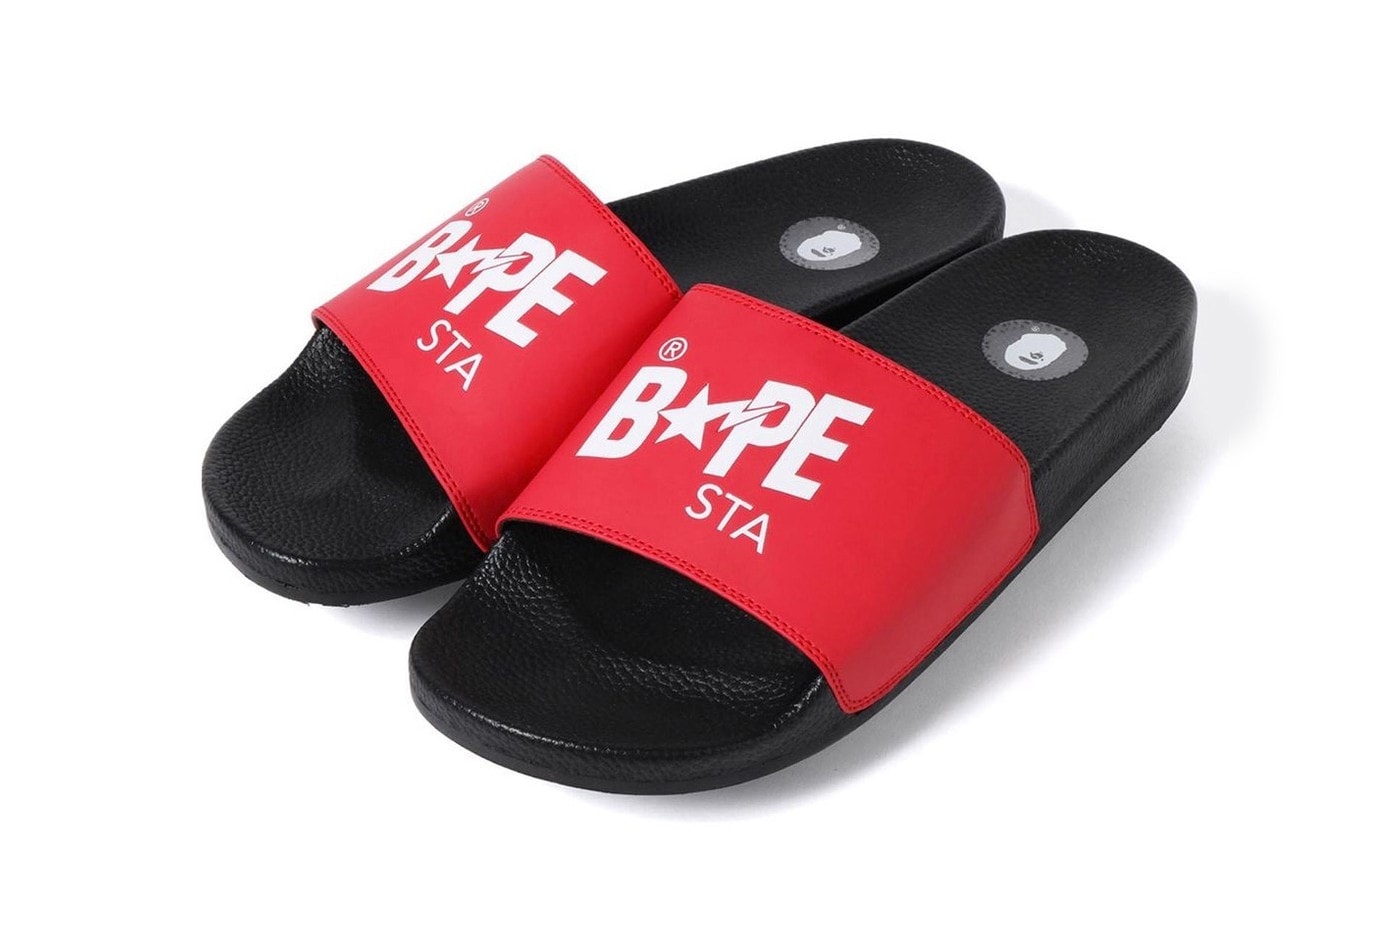 A BATHING APE® 全新 BAPESTA 樣式拖鞋發佈